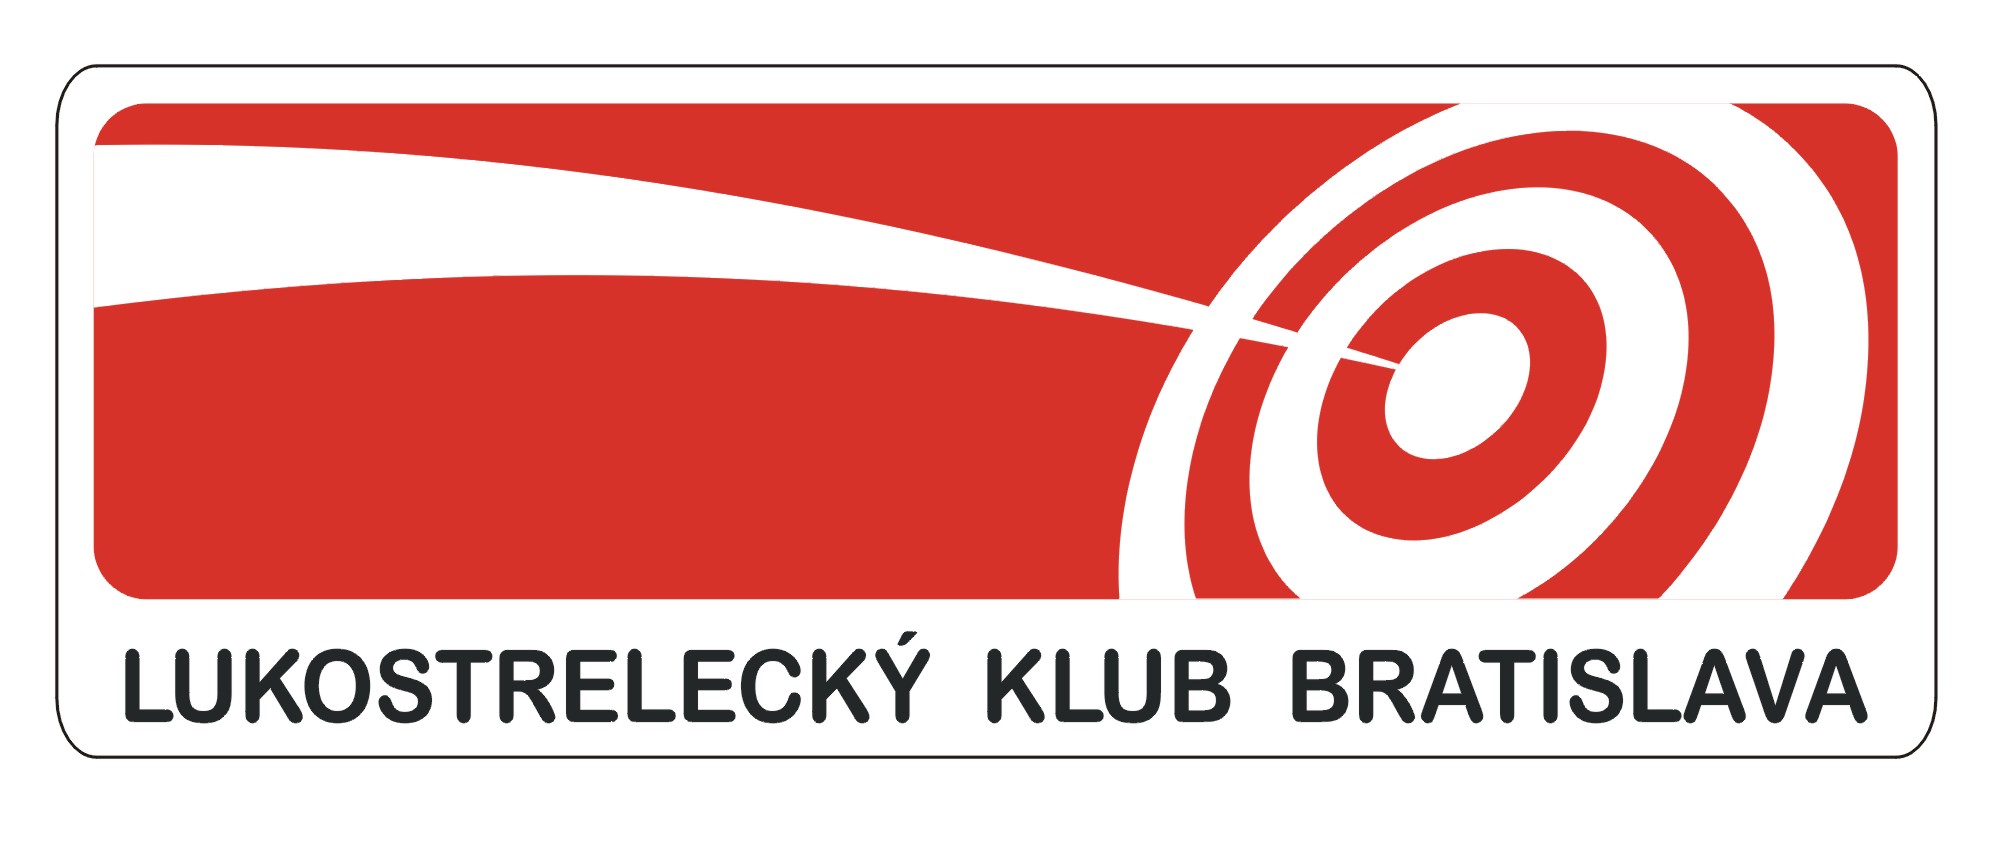 Lukostrelecký klub Bratislava